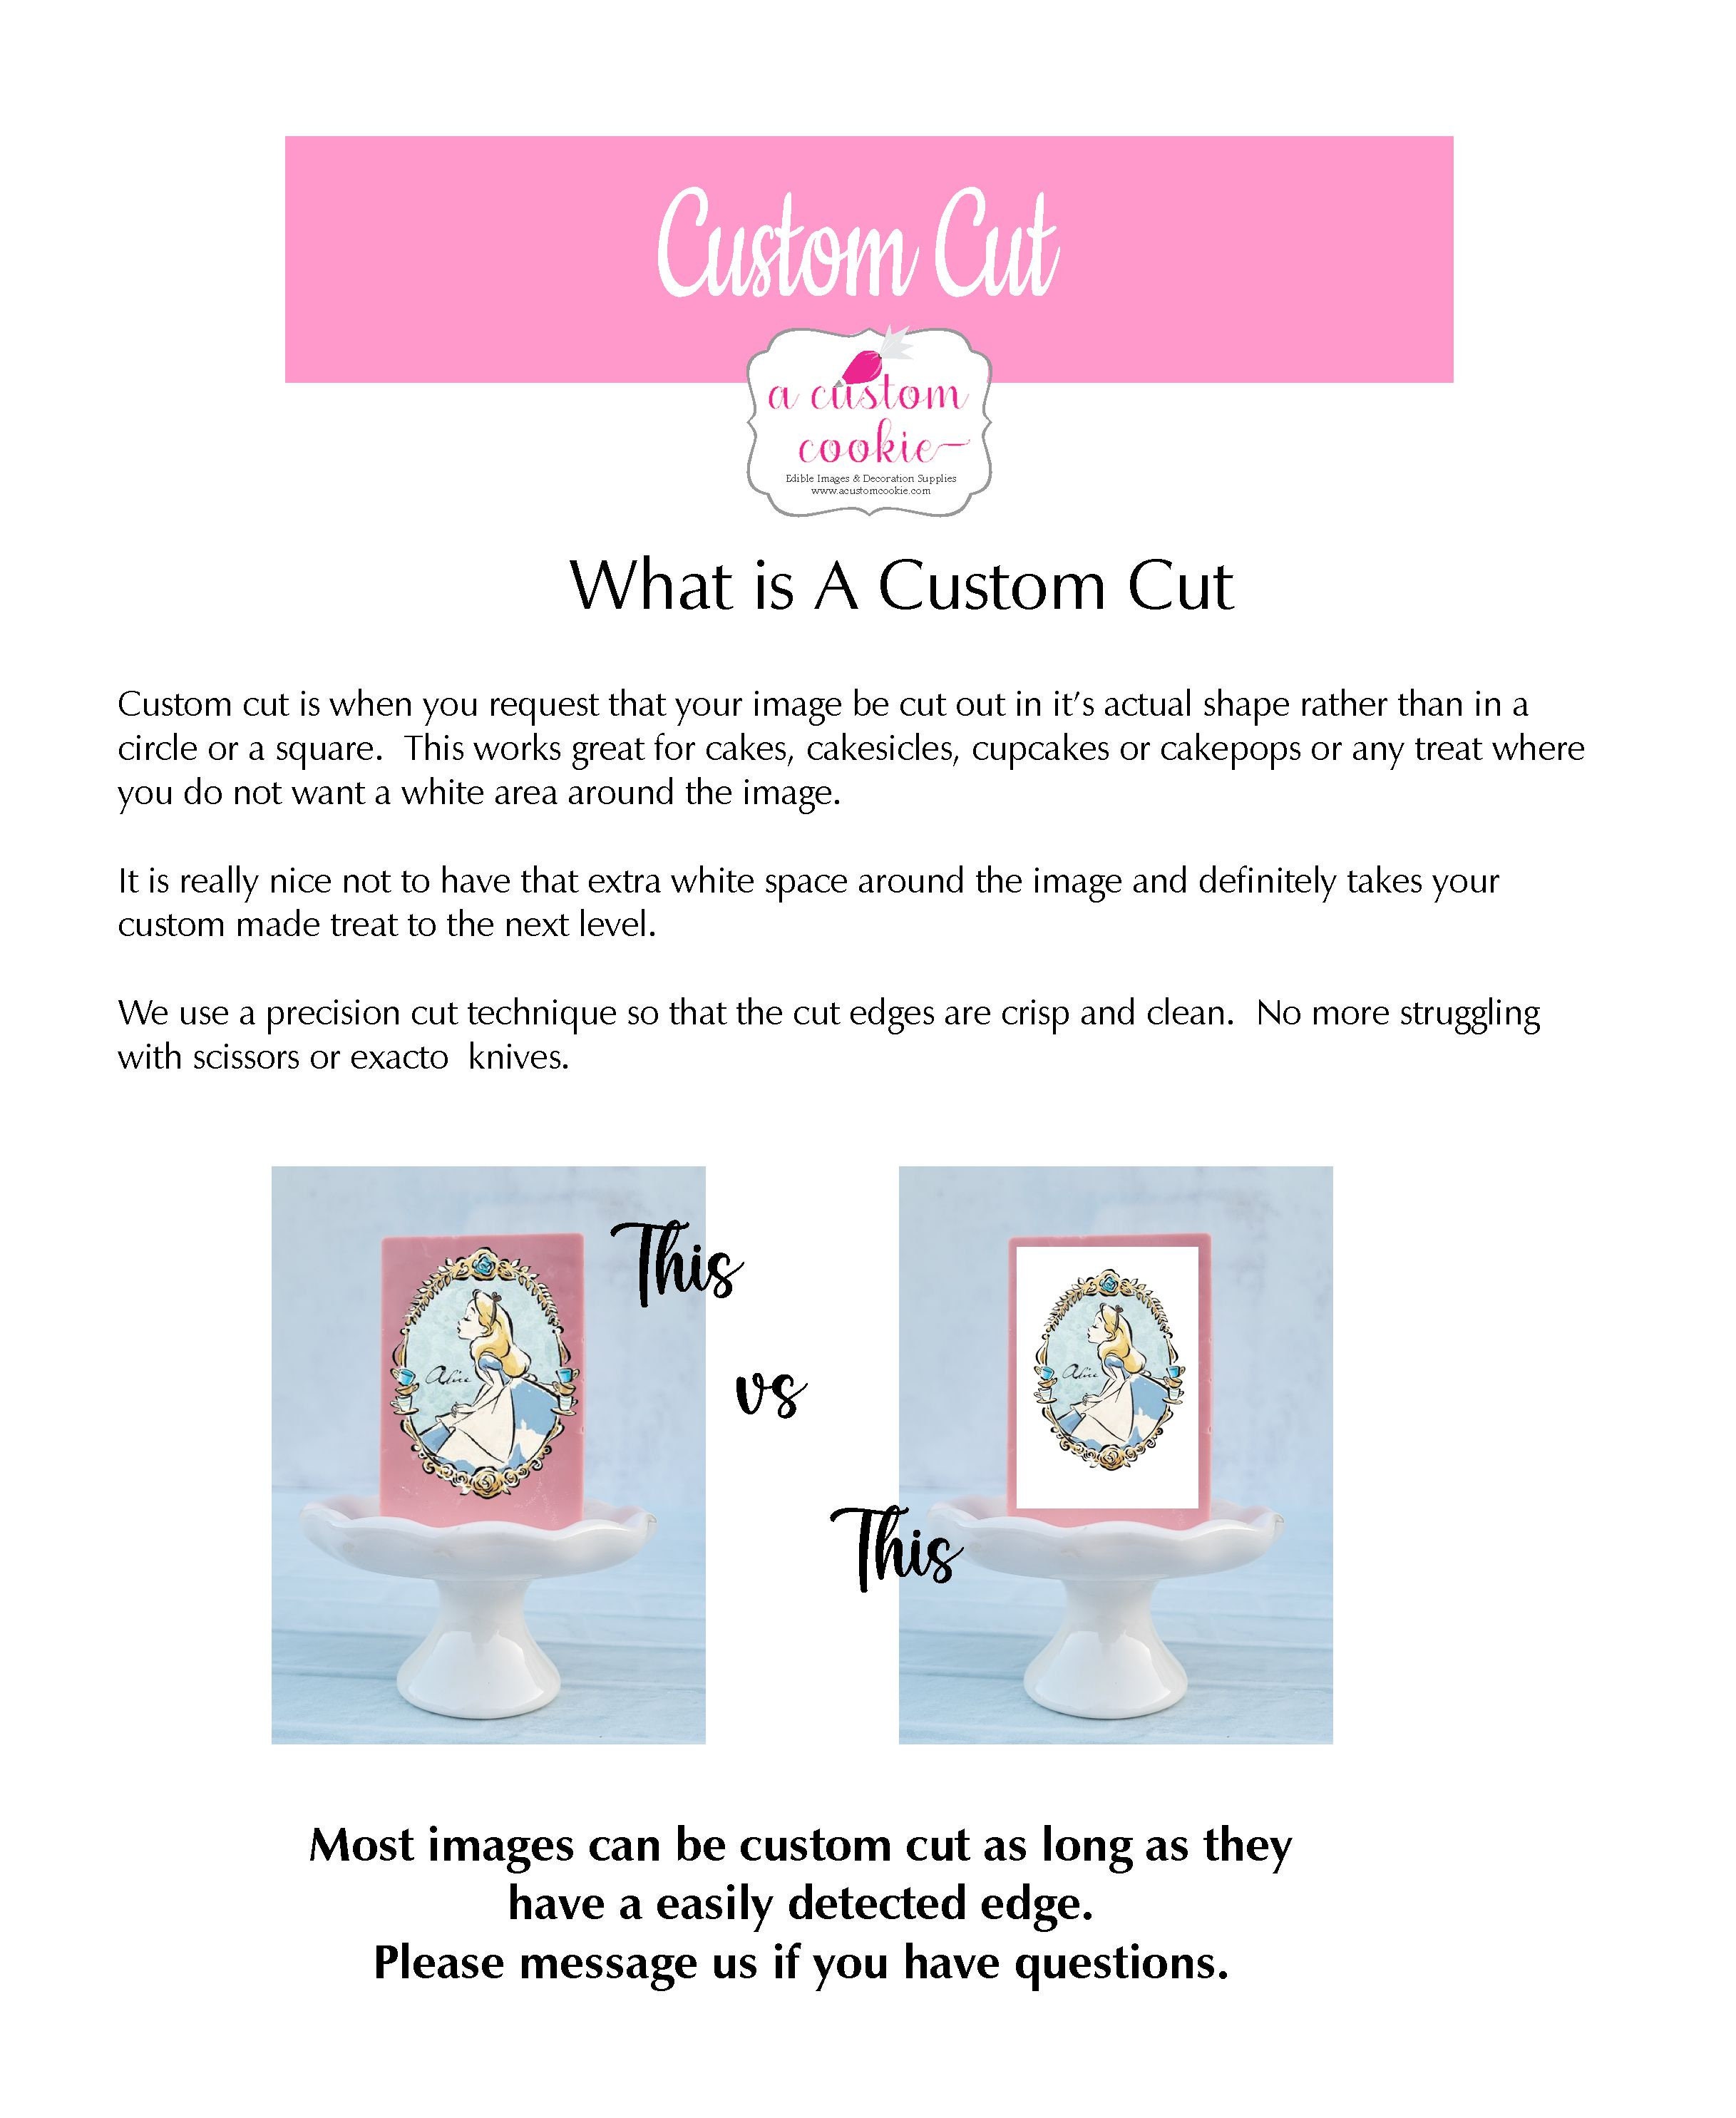 Special feature: Custom Cut